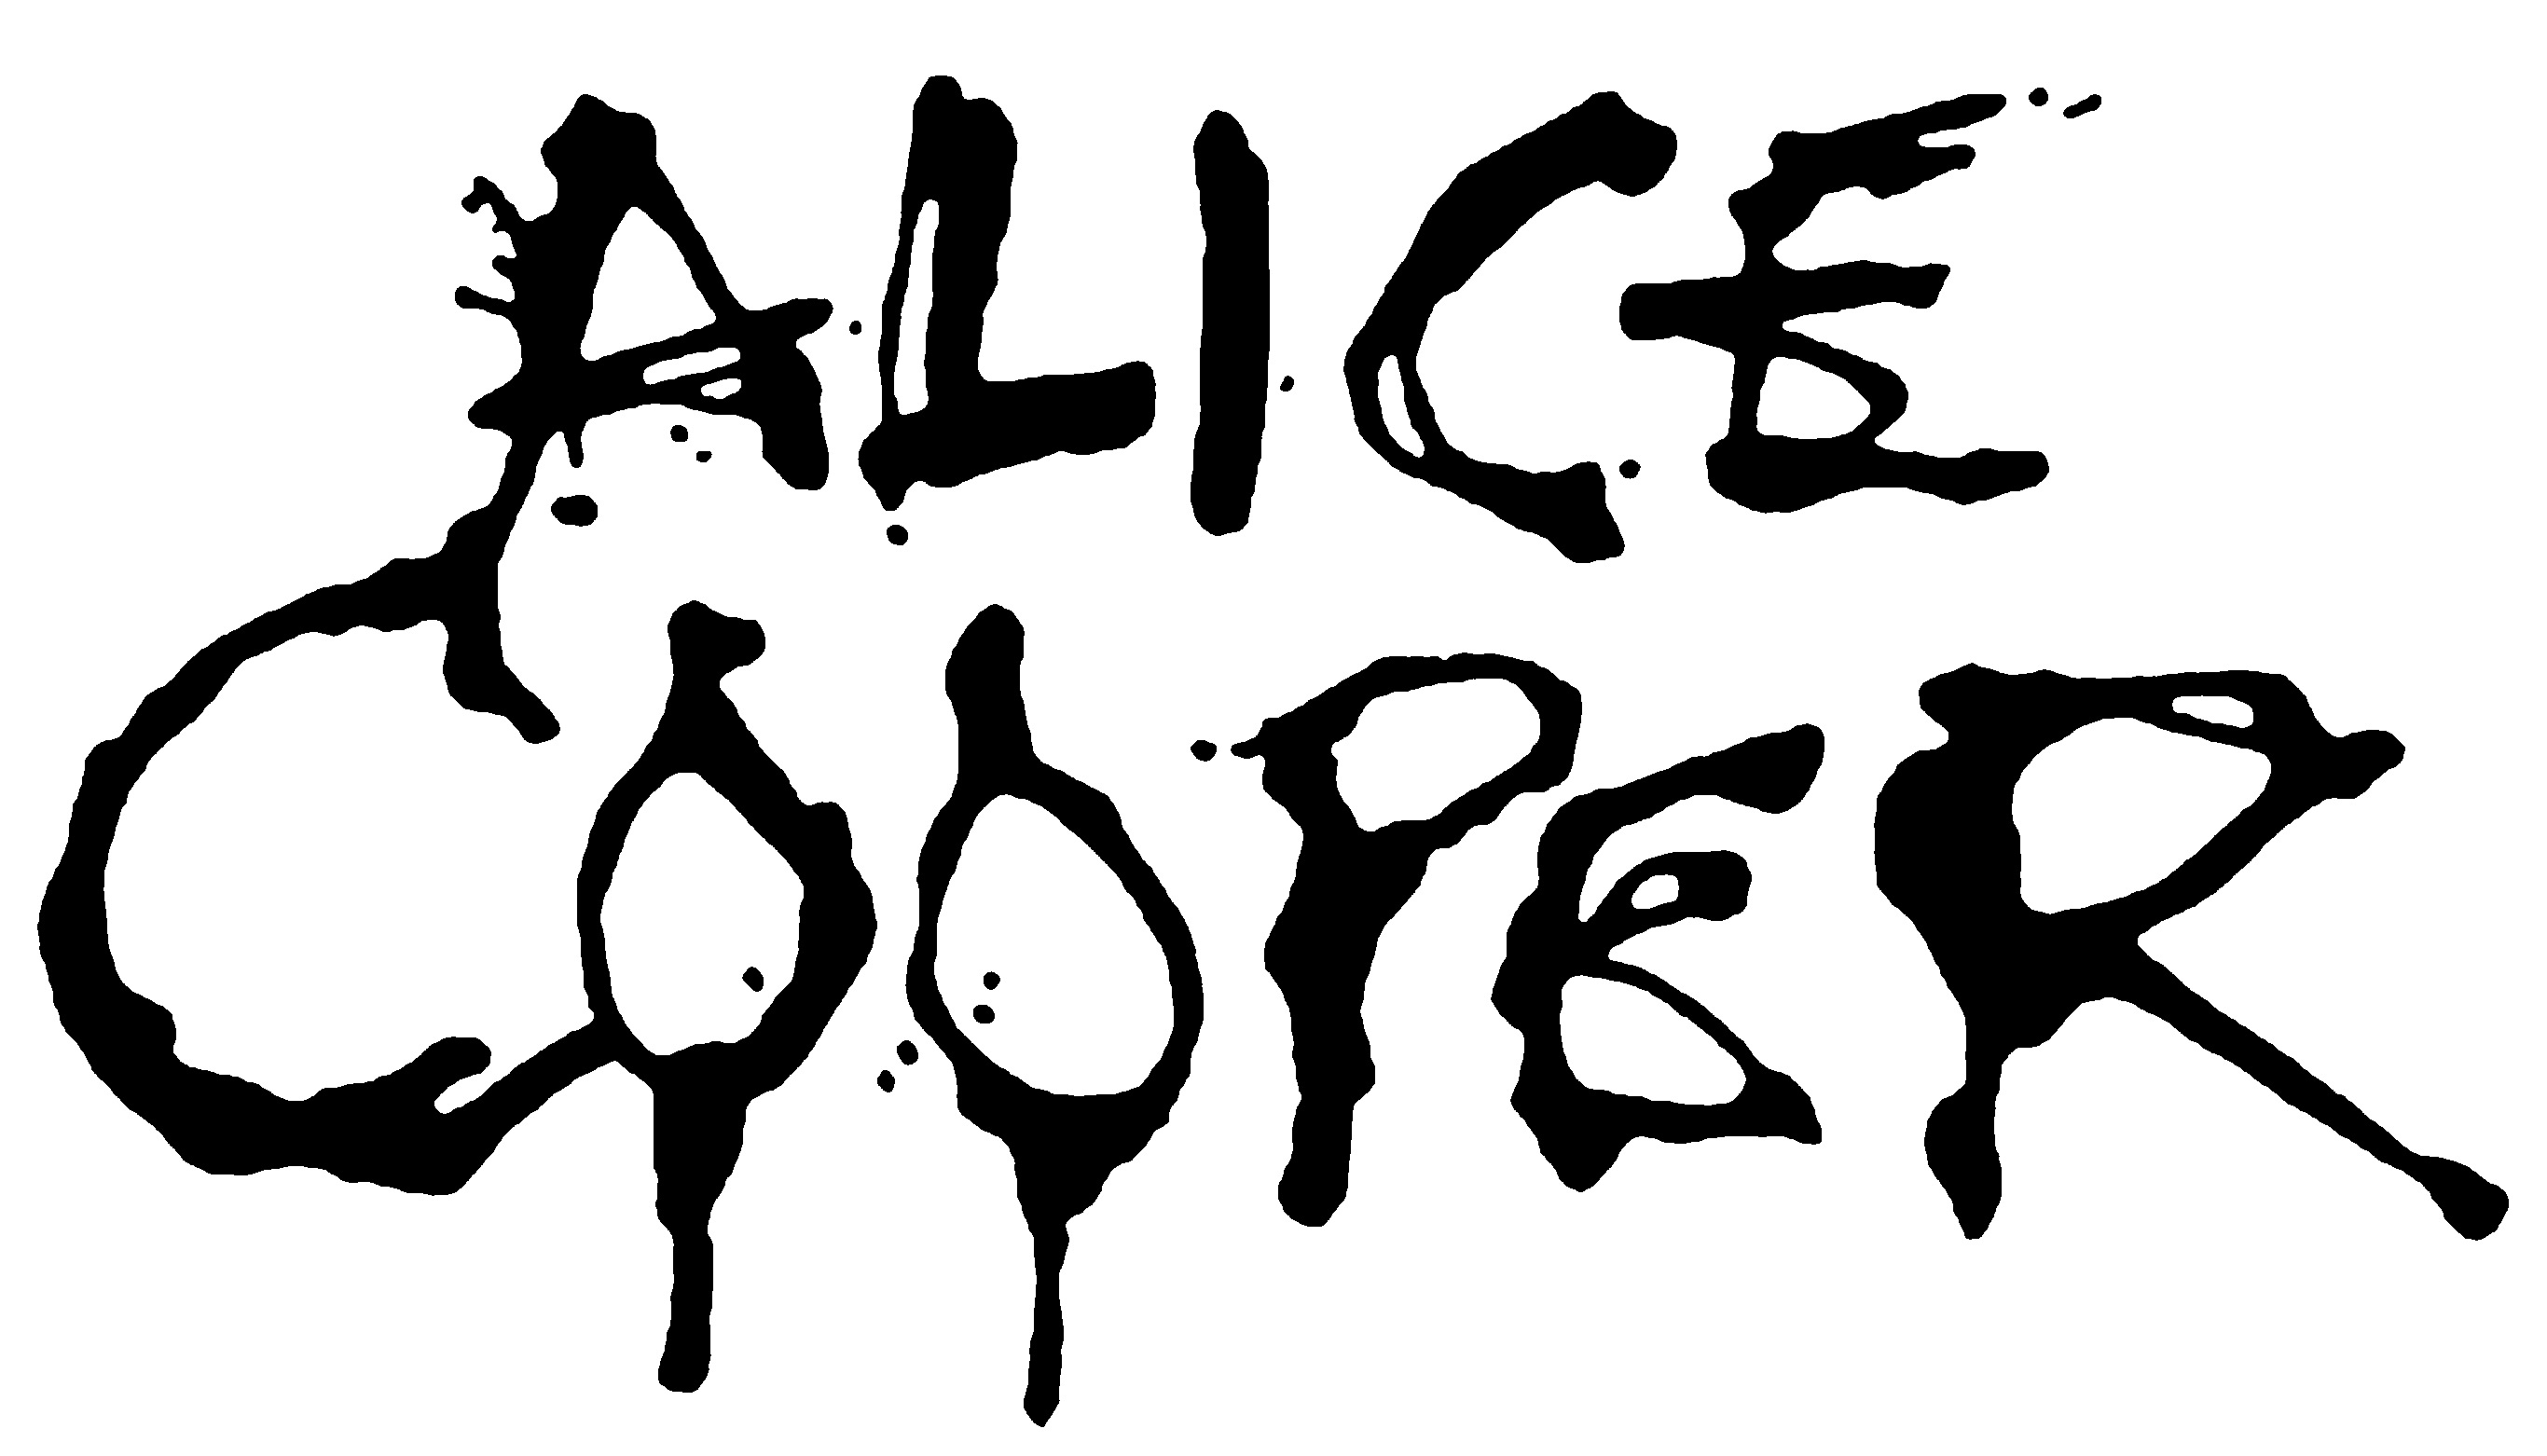 Alice Cooper Logo - alice cooper logo - Overdrive Music Magazine